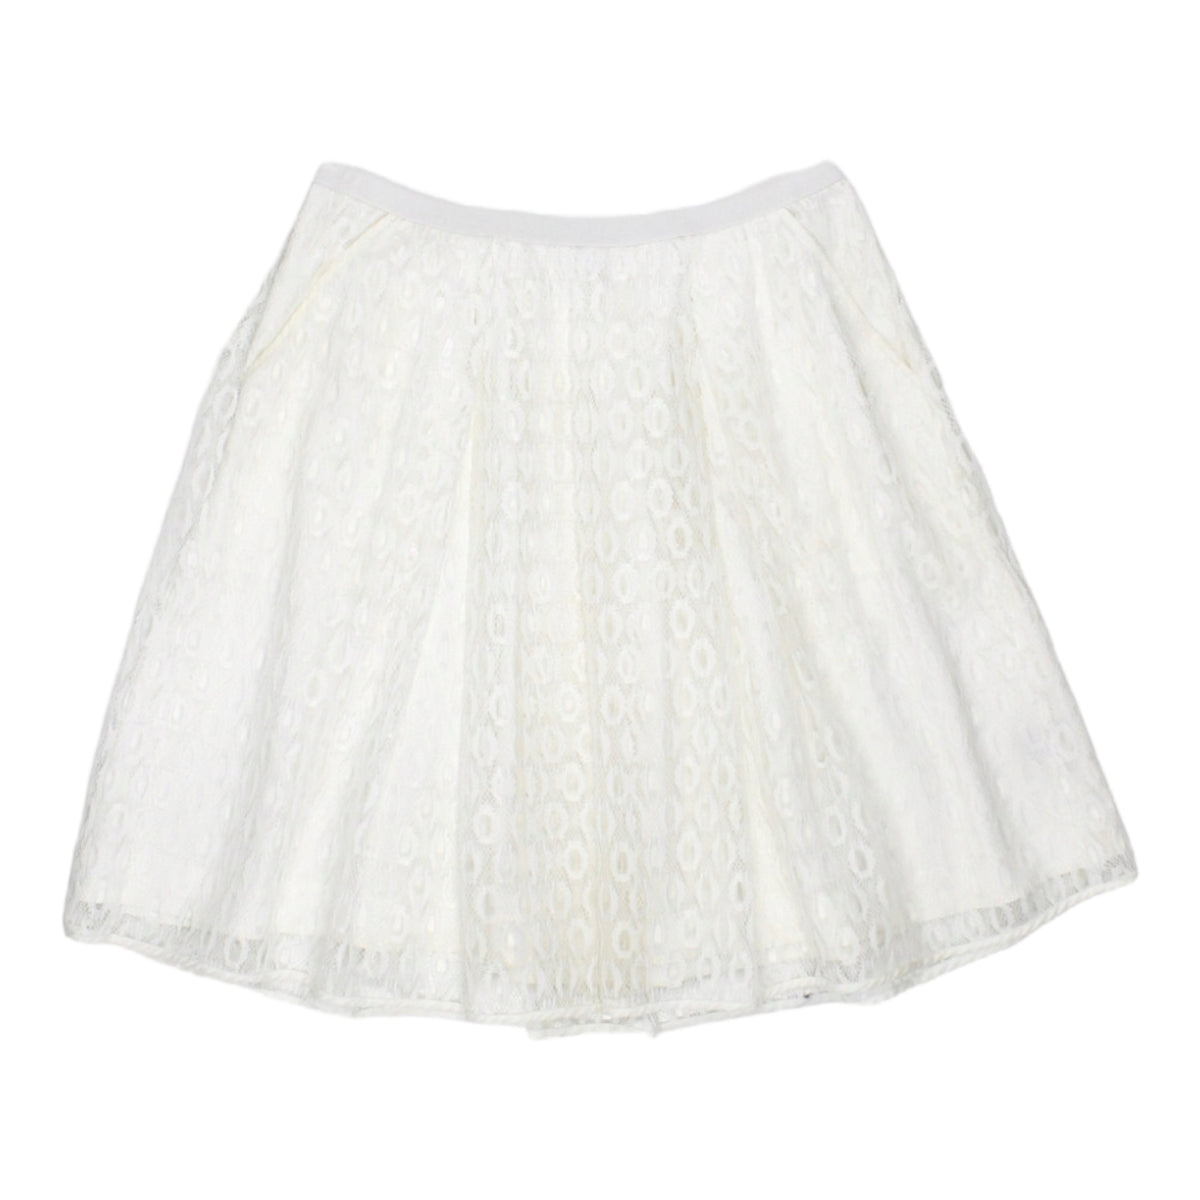 Maeve White Lace Skirt